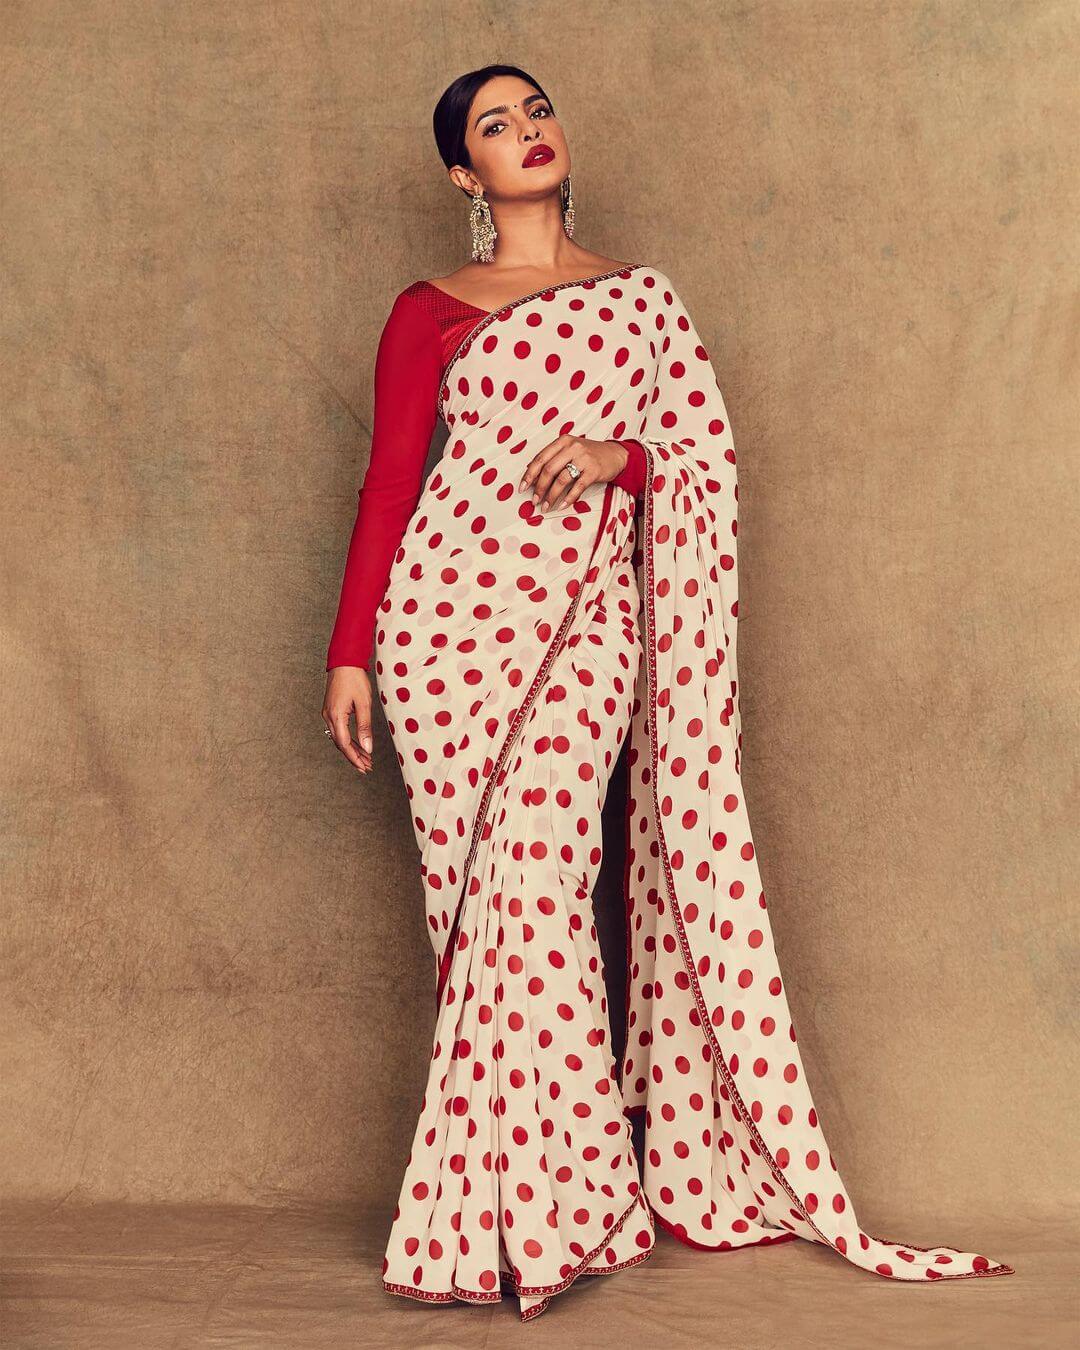 Priyanka Chopra Rocking The Red And White Polka Dots Saree